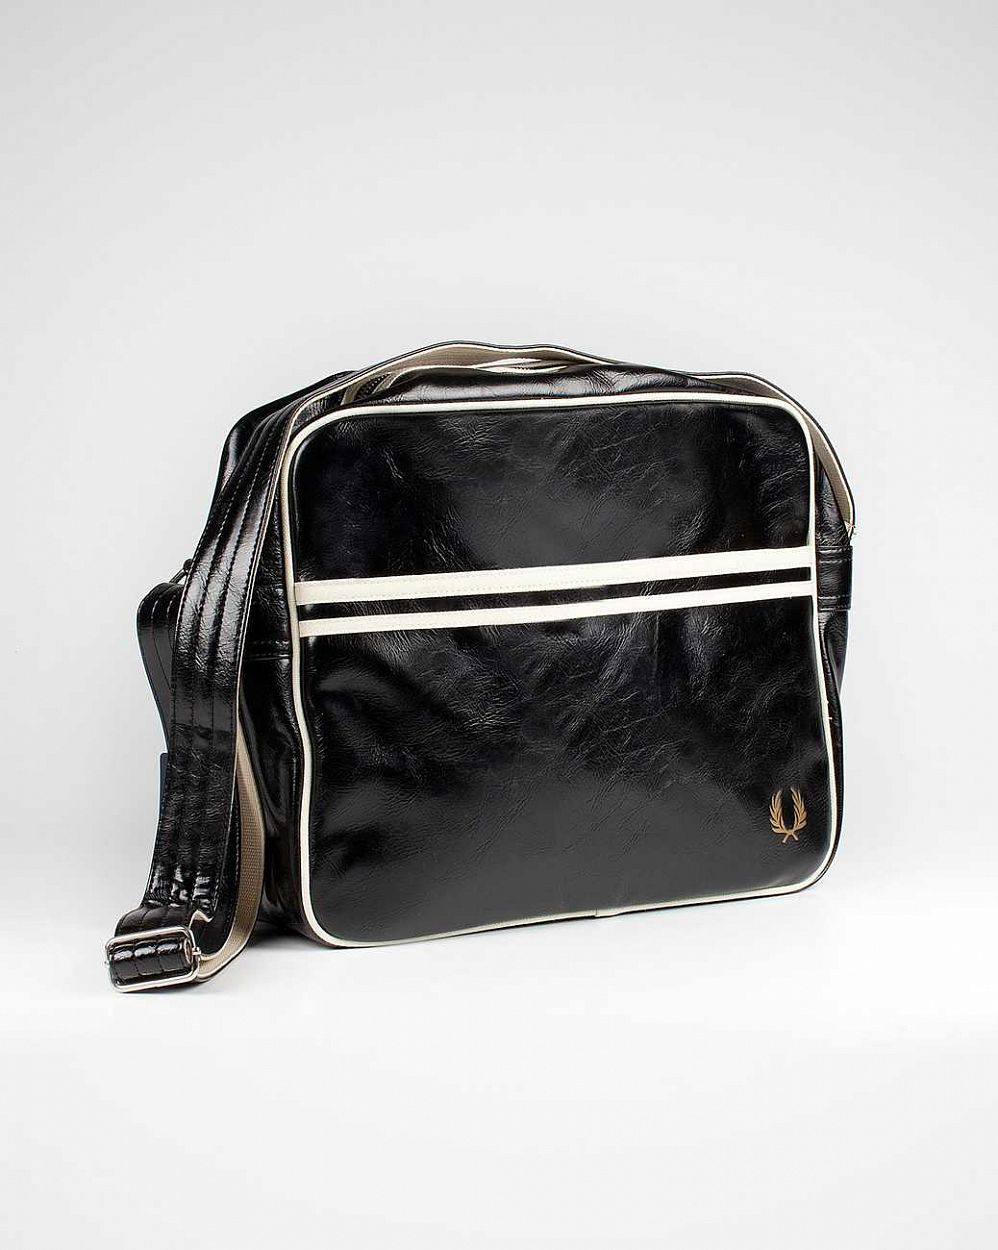 Сумка Fred Perry L1180 Classic Shoulder Bag Black отзывы